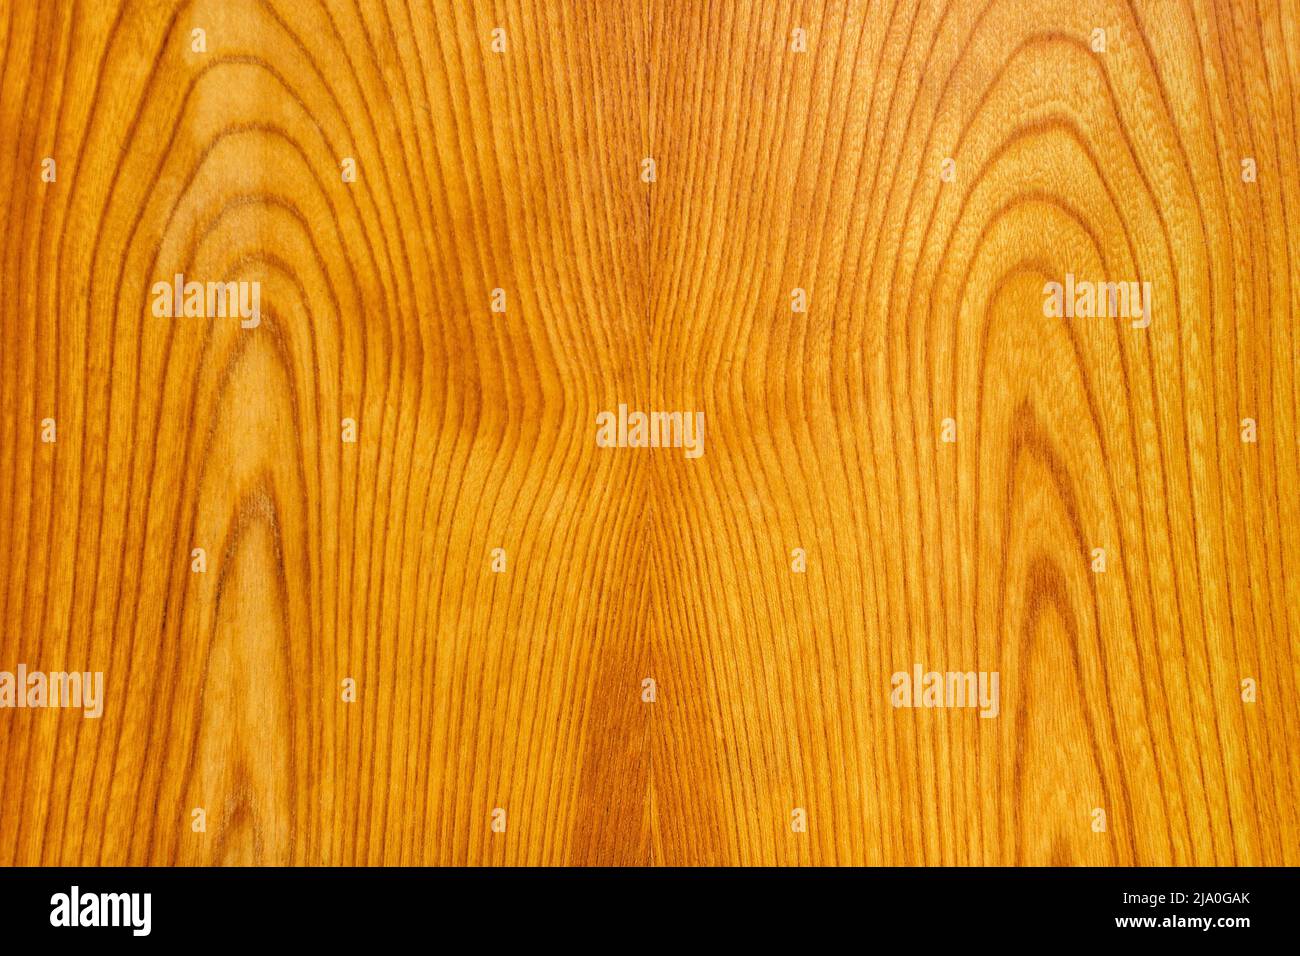 Beautiful wooden veneer texture for background Stock Photo